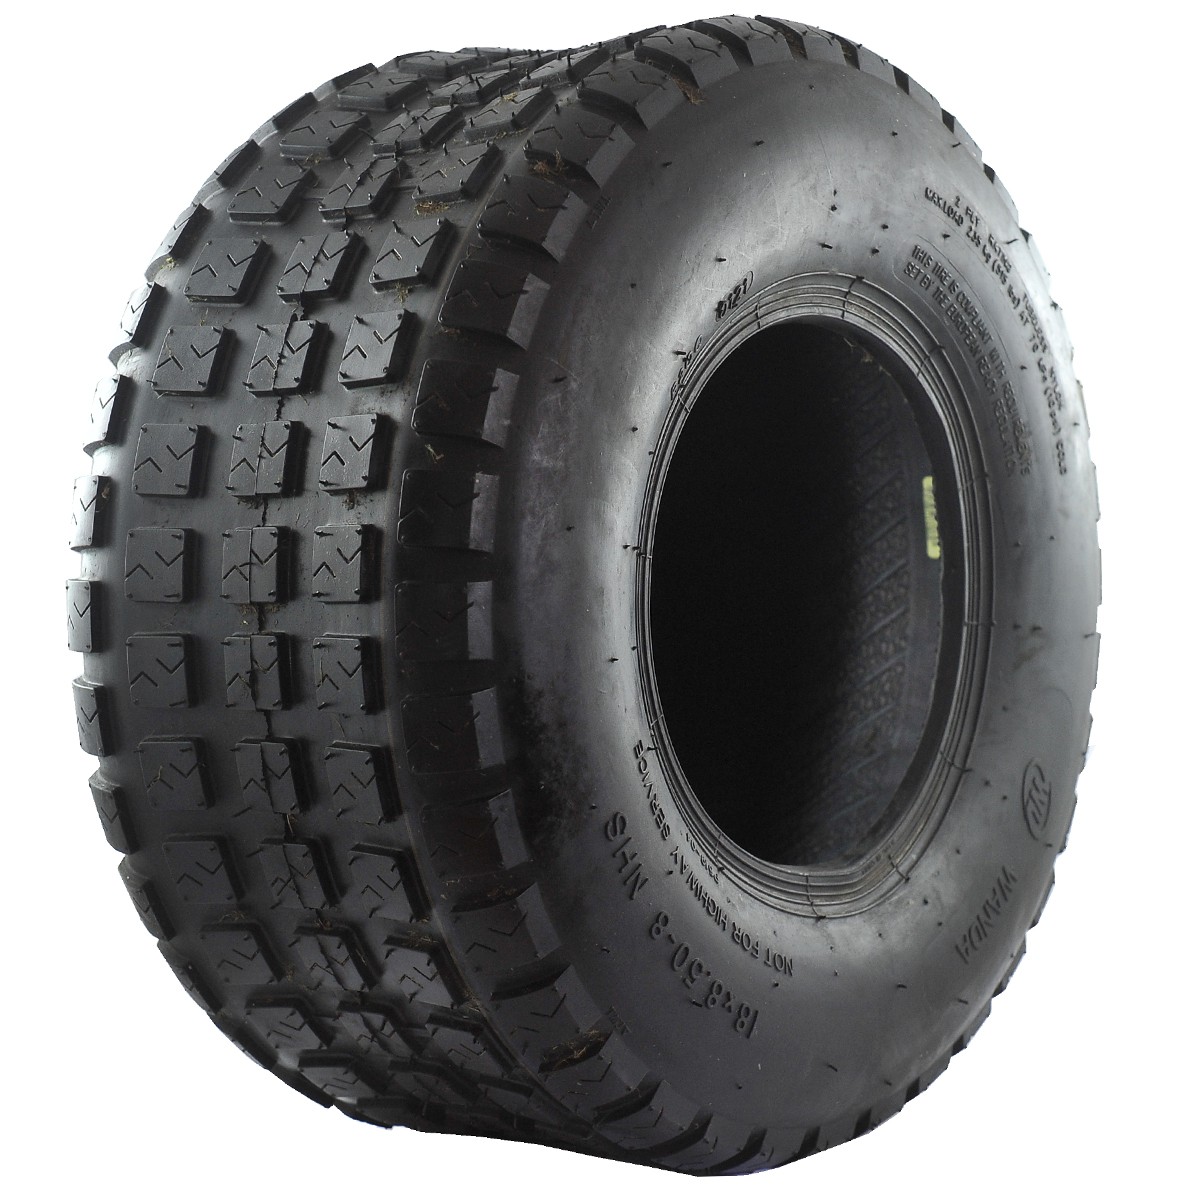 Tire for AL-KO lawn tractor T15-93.7 HD-A / 18 x 8.50-8 NHS / 471020